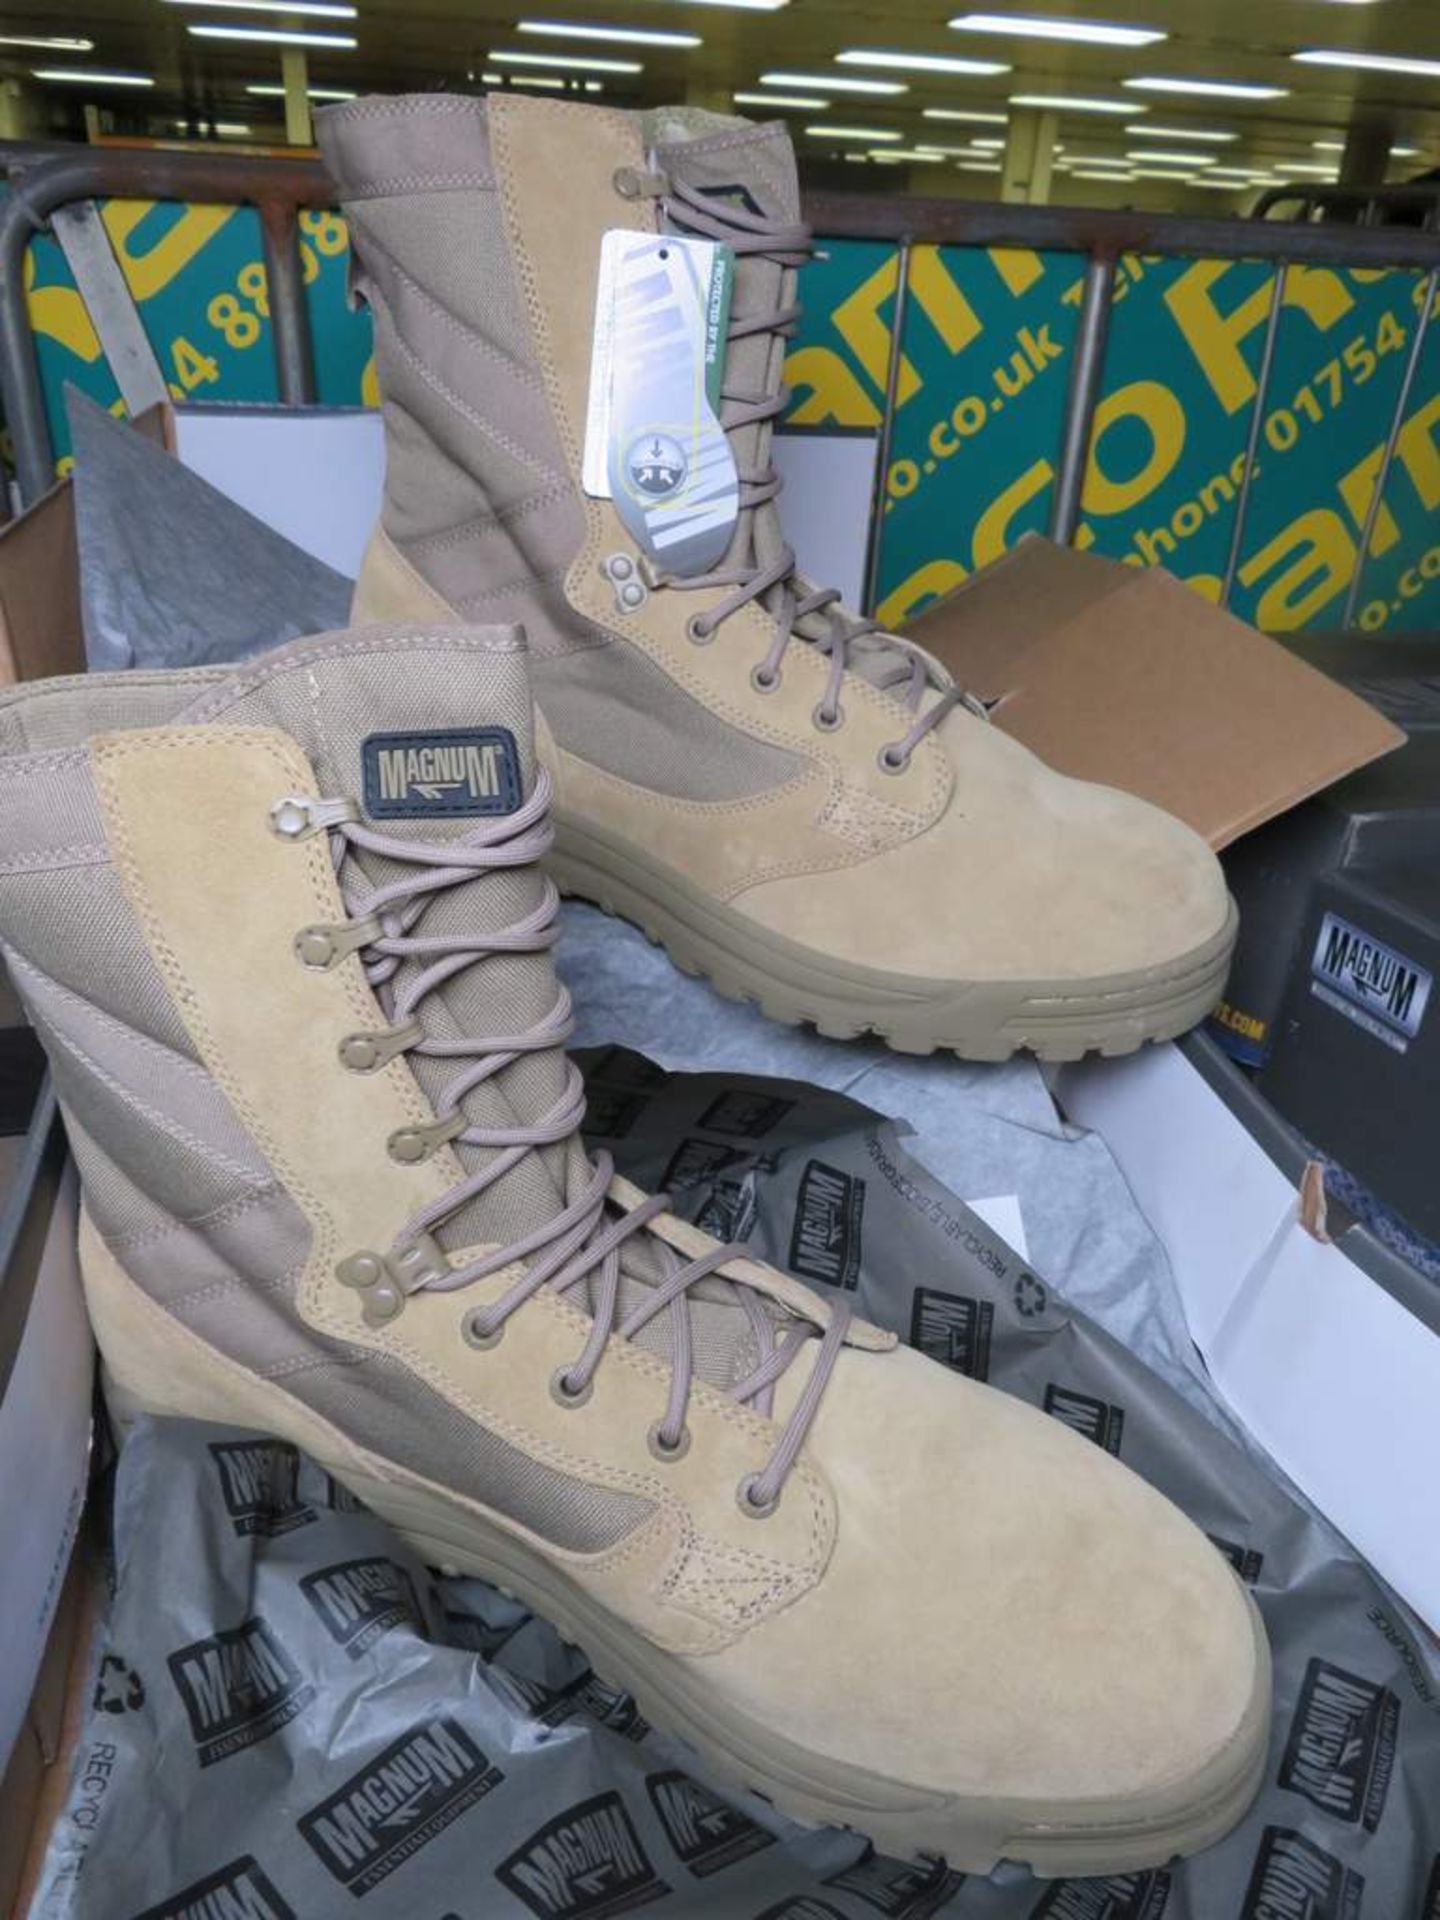 2x Magnum Amazon Desert Boots - New - Size 14L